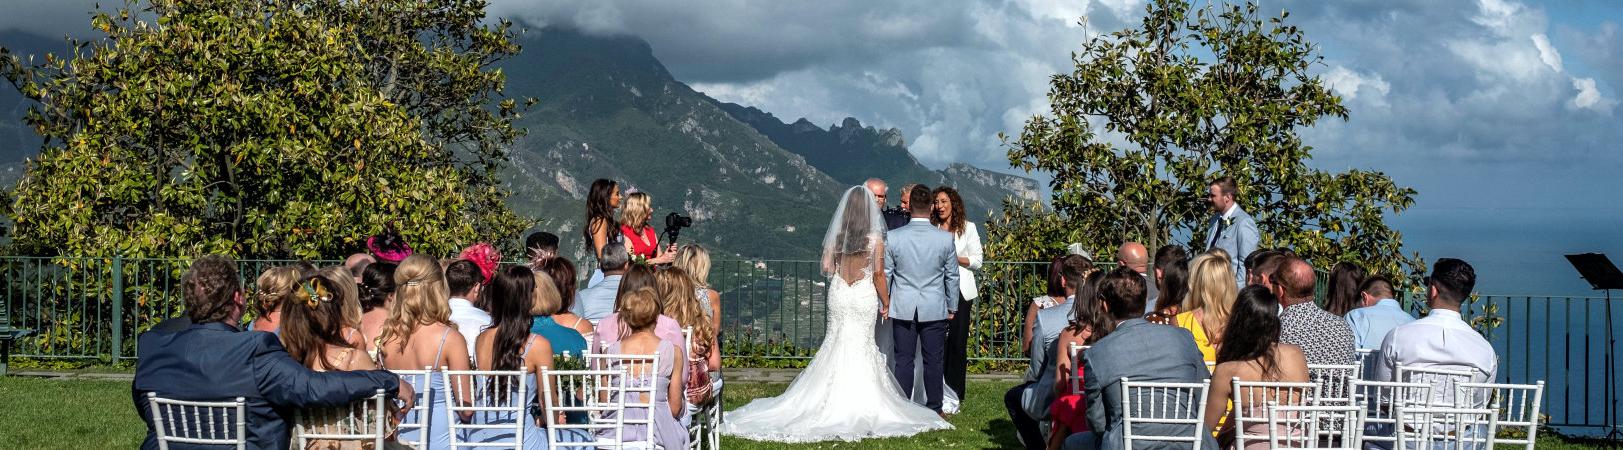 Weddings on the Amalfi Coast